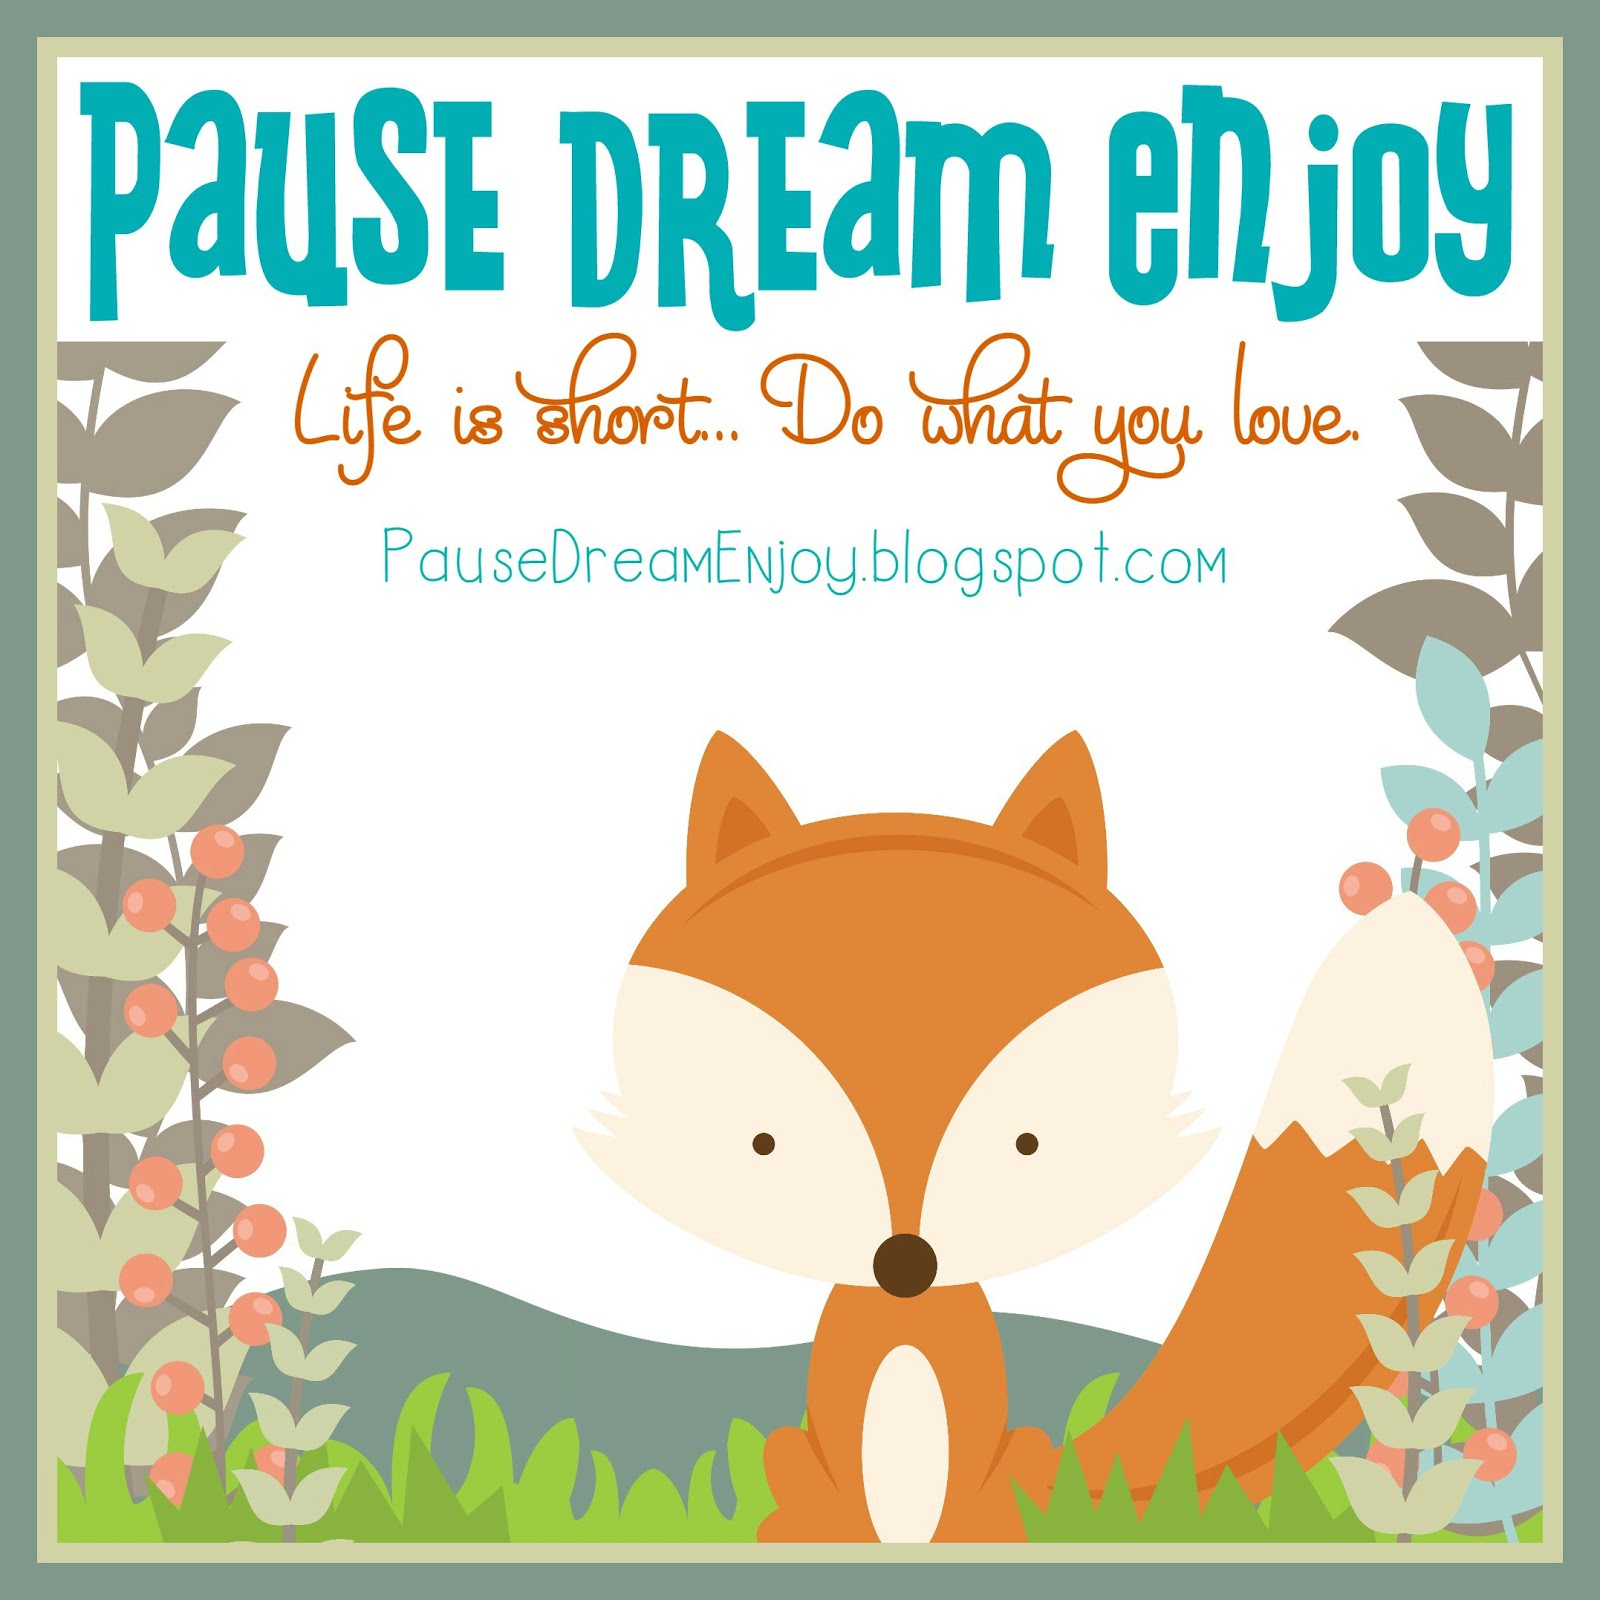 Pause Dream Enjoy